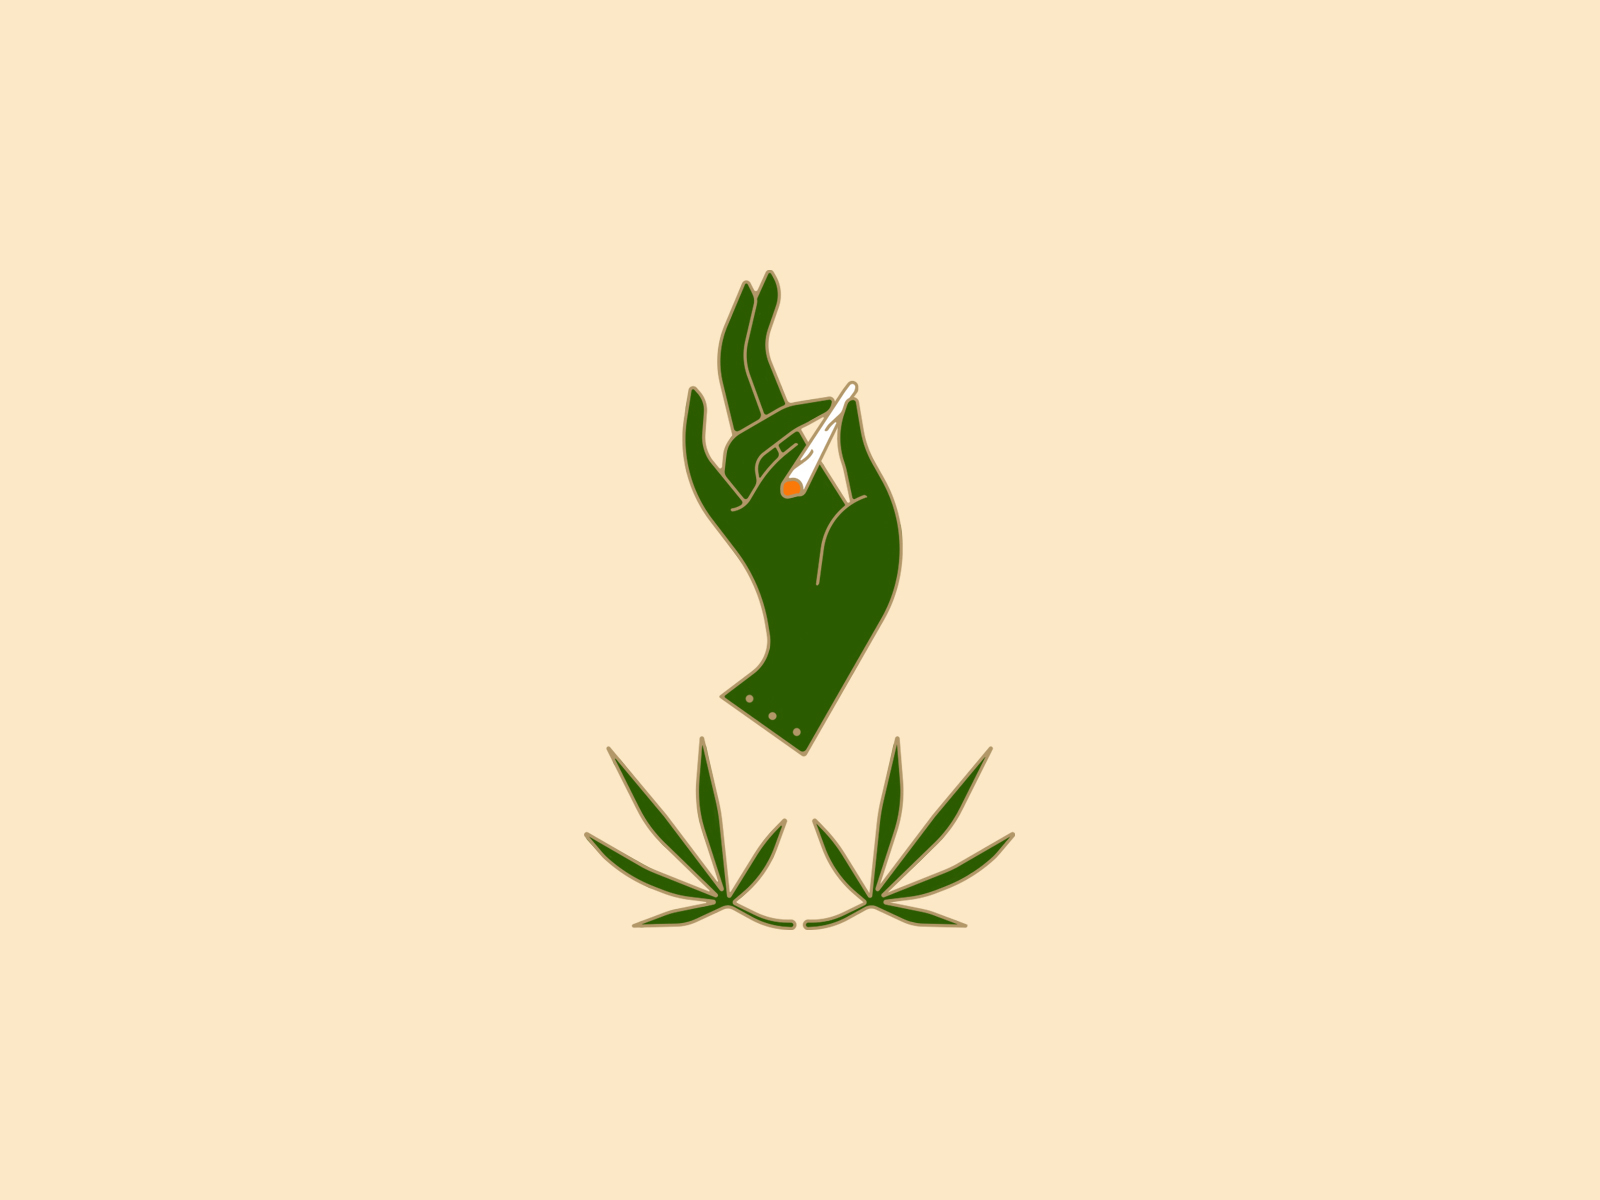 Puff Puff Pass Cannabis Leaf Metal Sign – Wreath Sign Designs